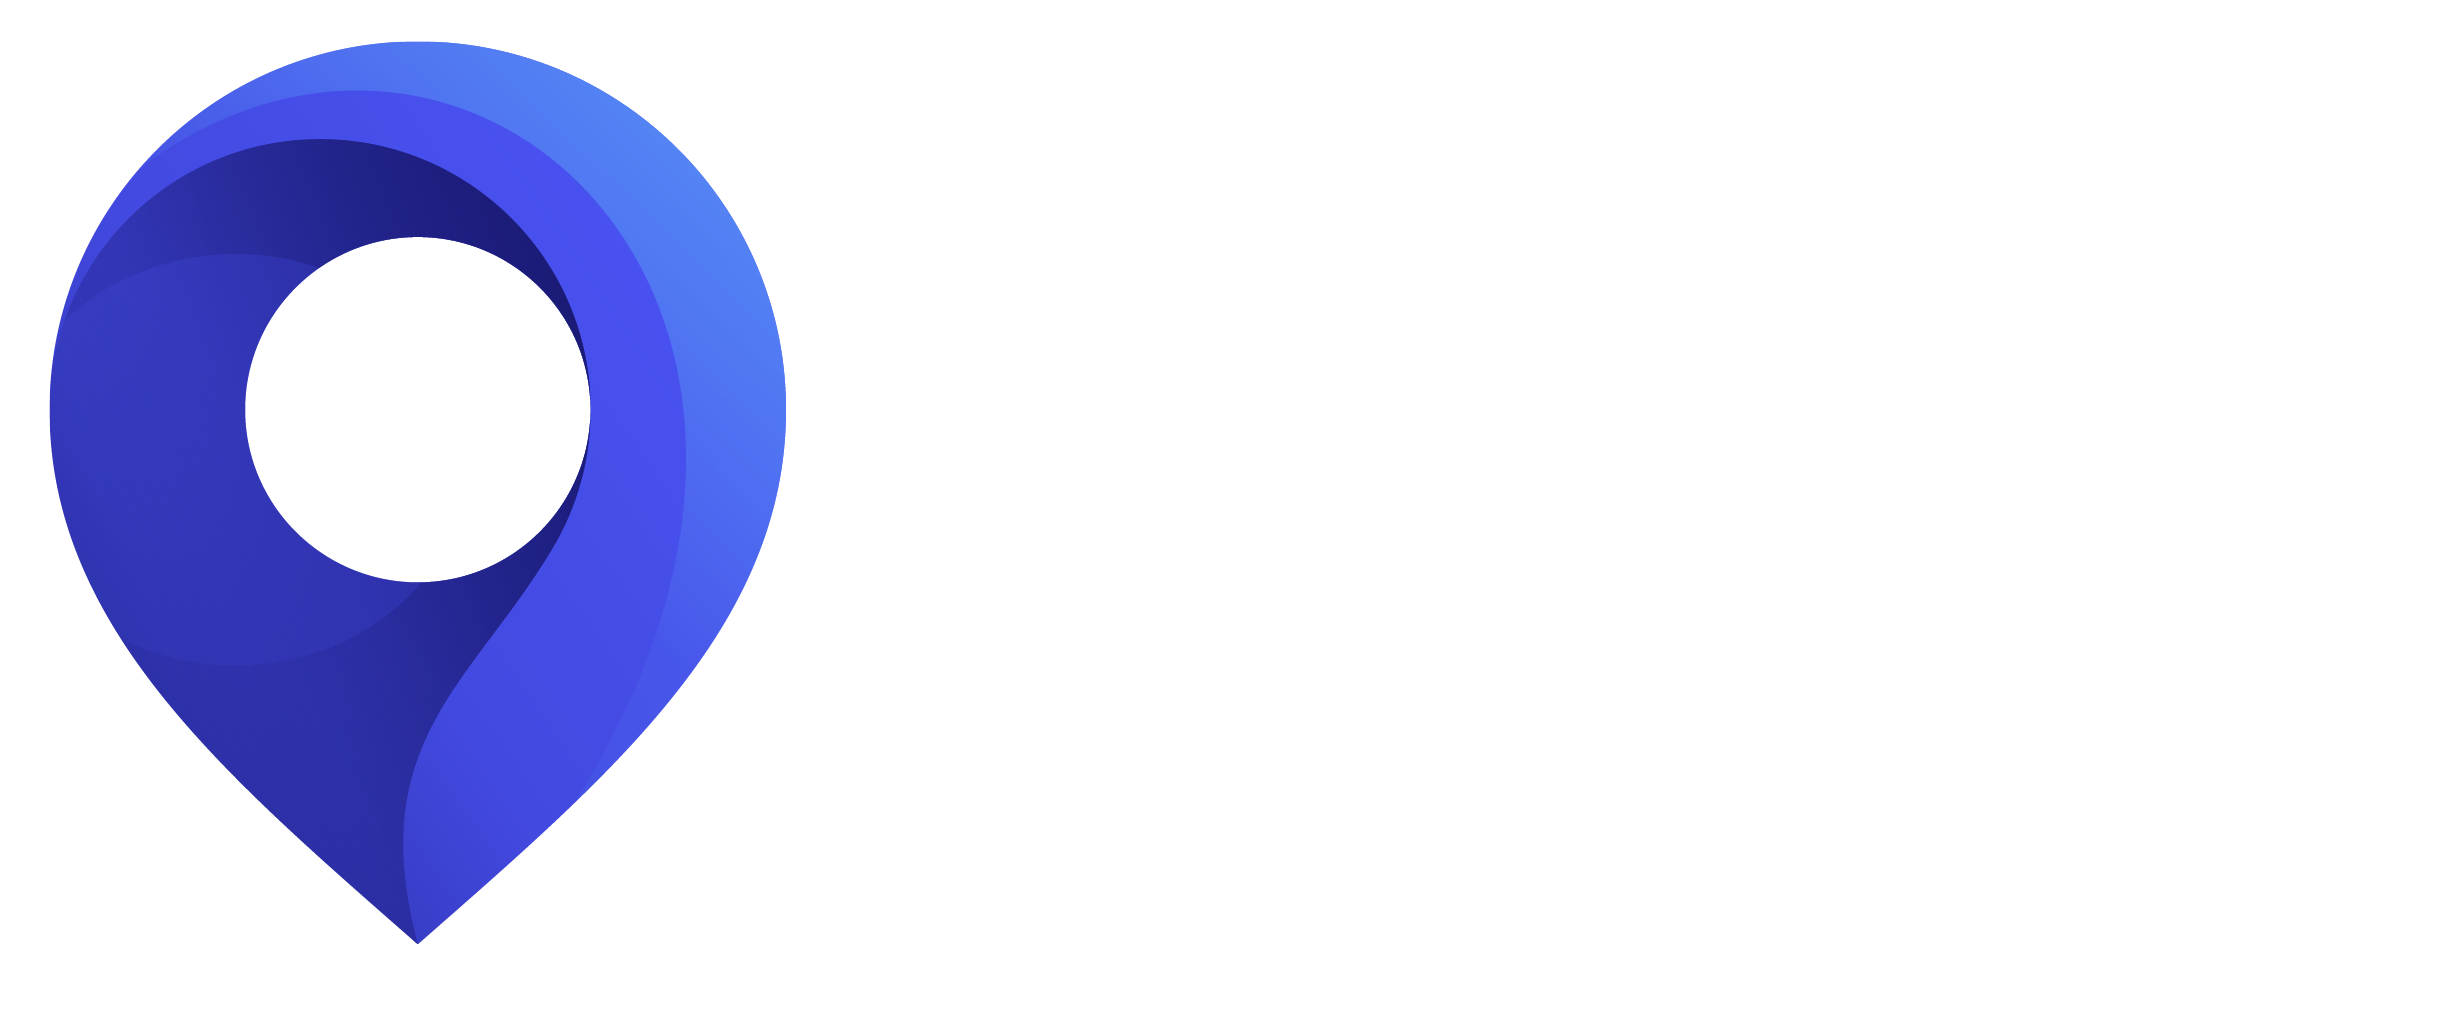 Agencia Marketing Local